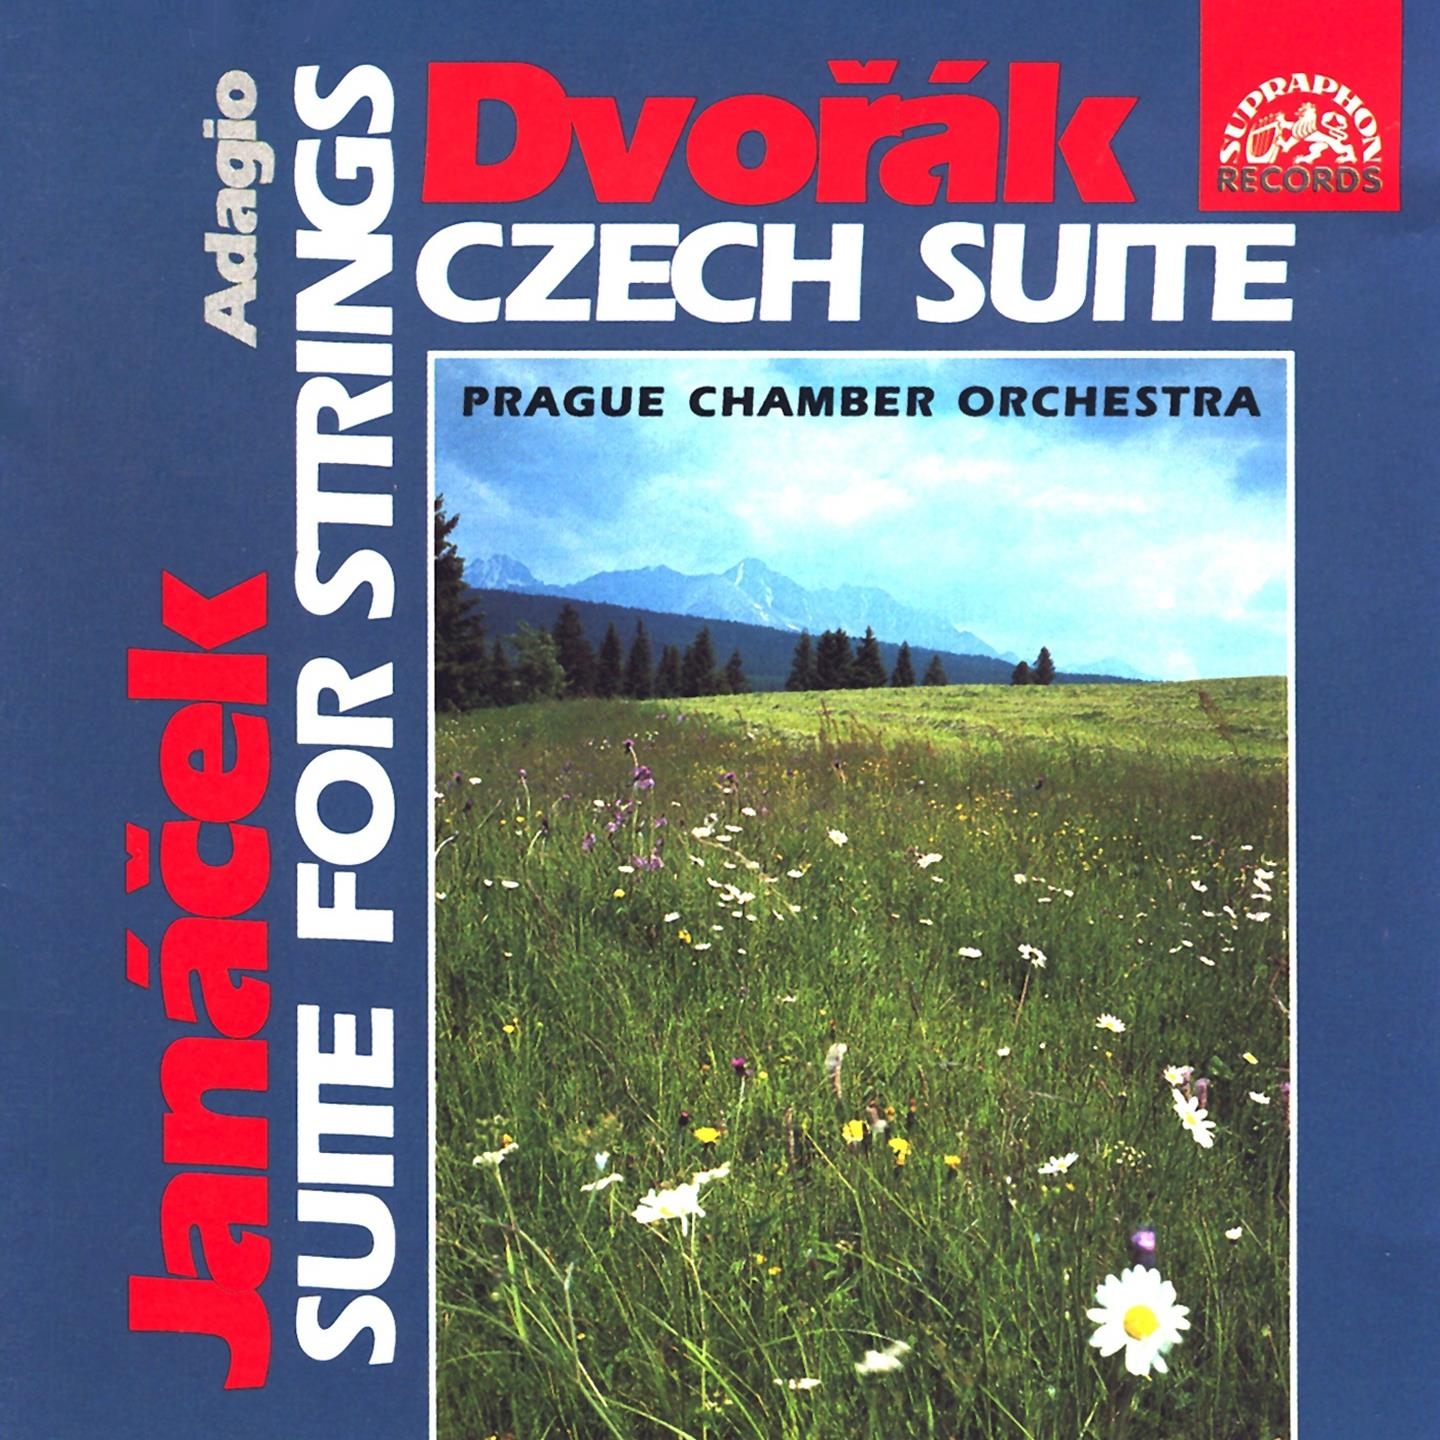 Dvoa k: Czech Suite  Jana ek: Suite for Strings, Adagio